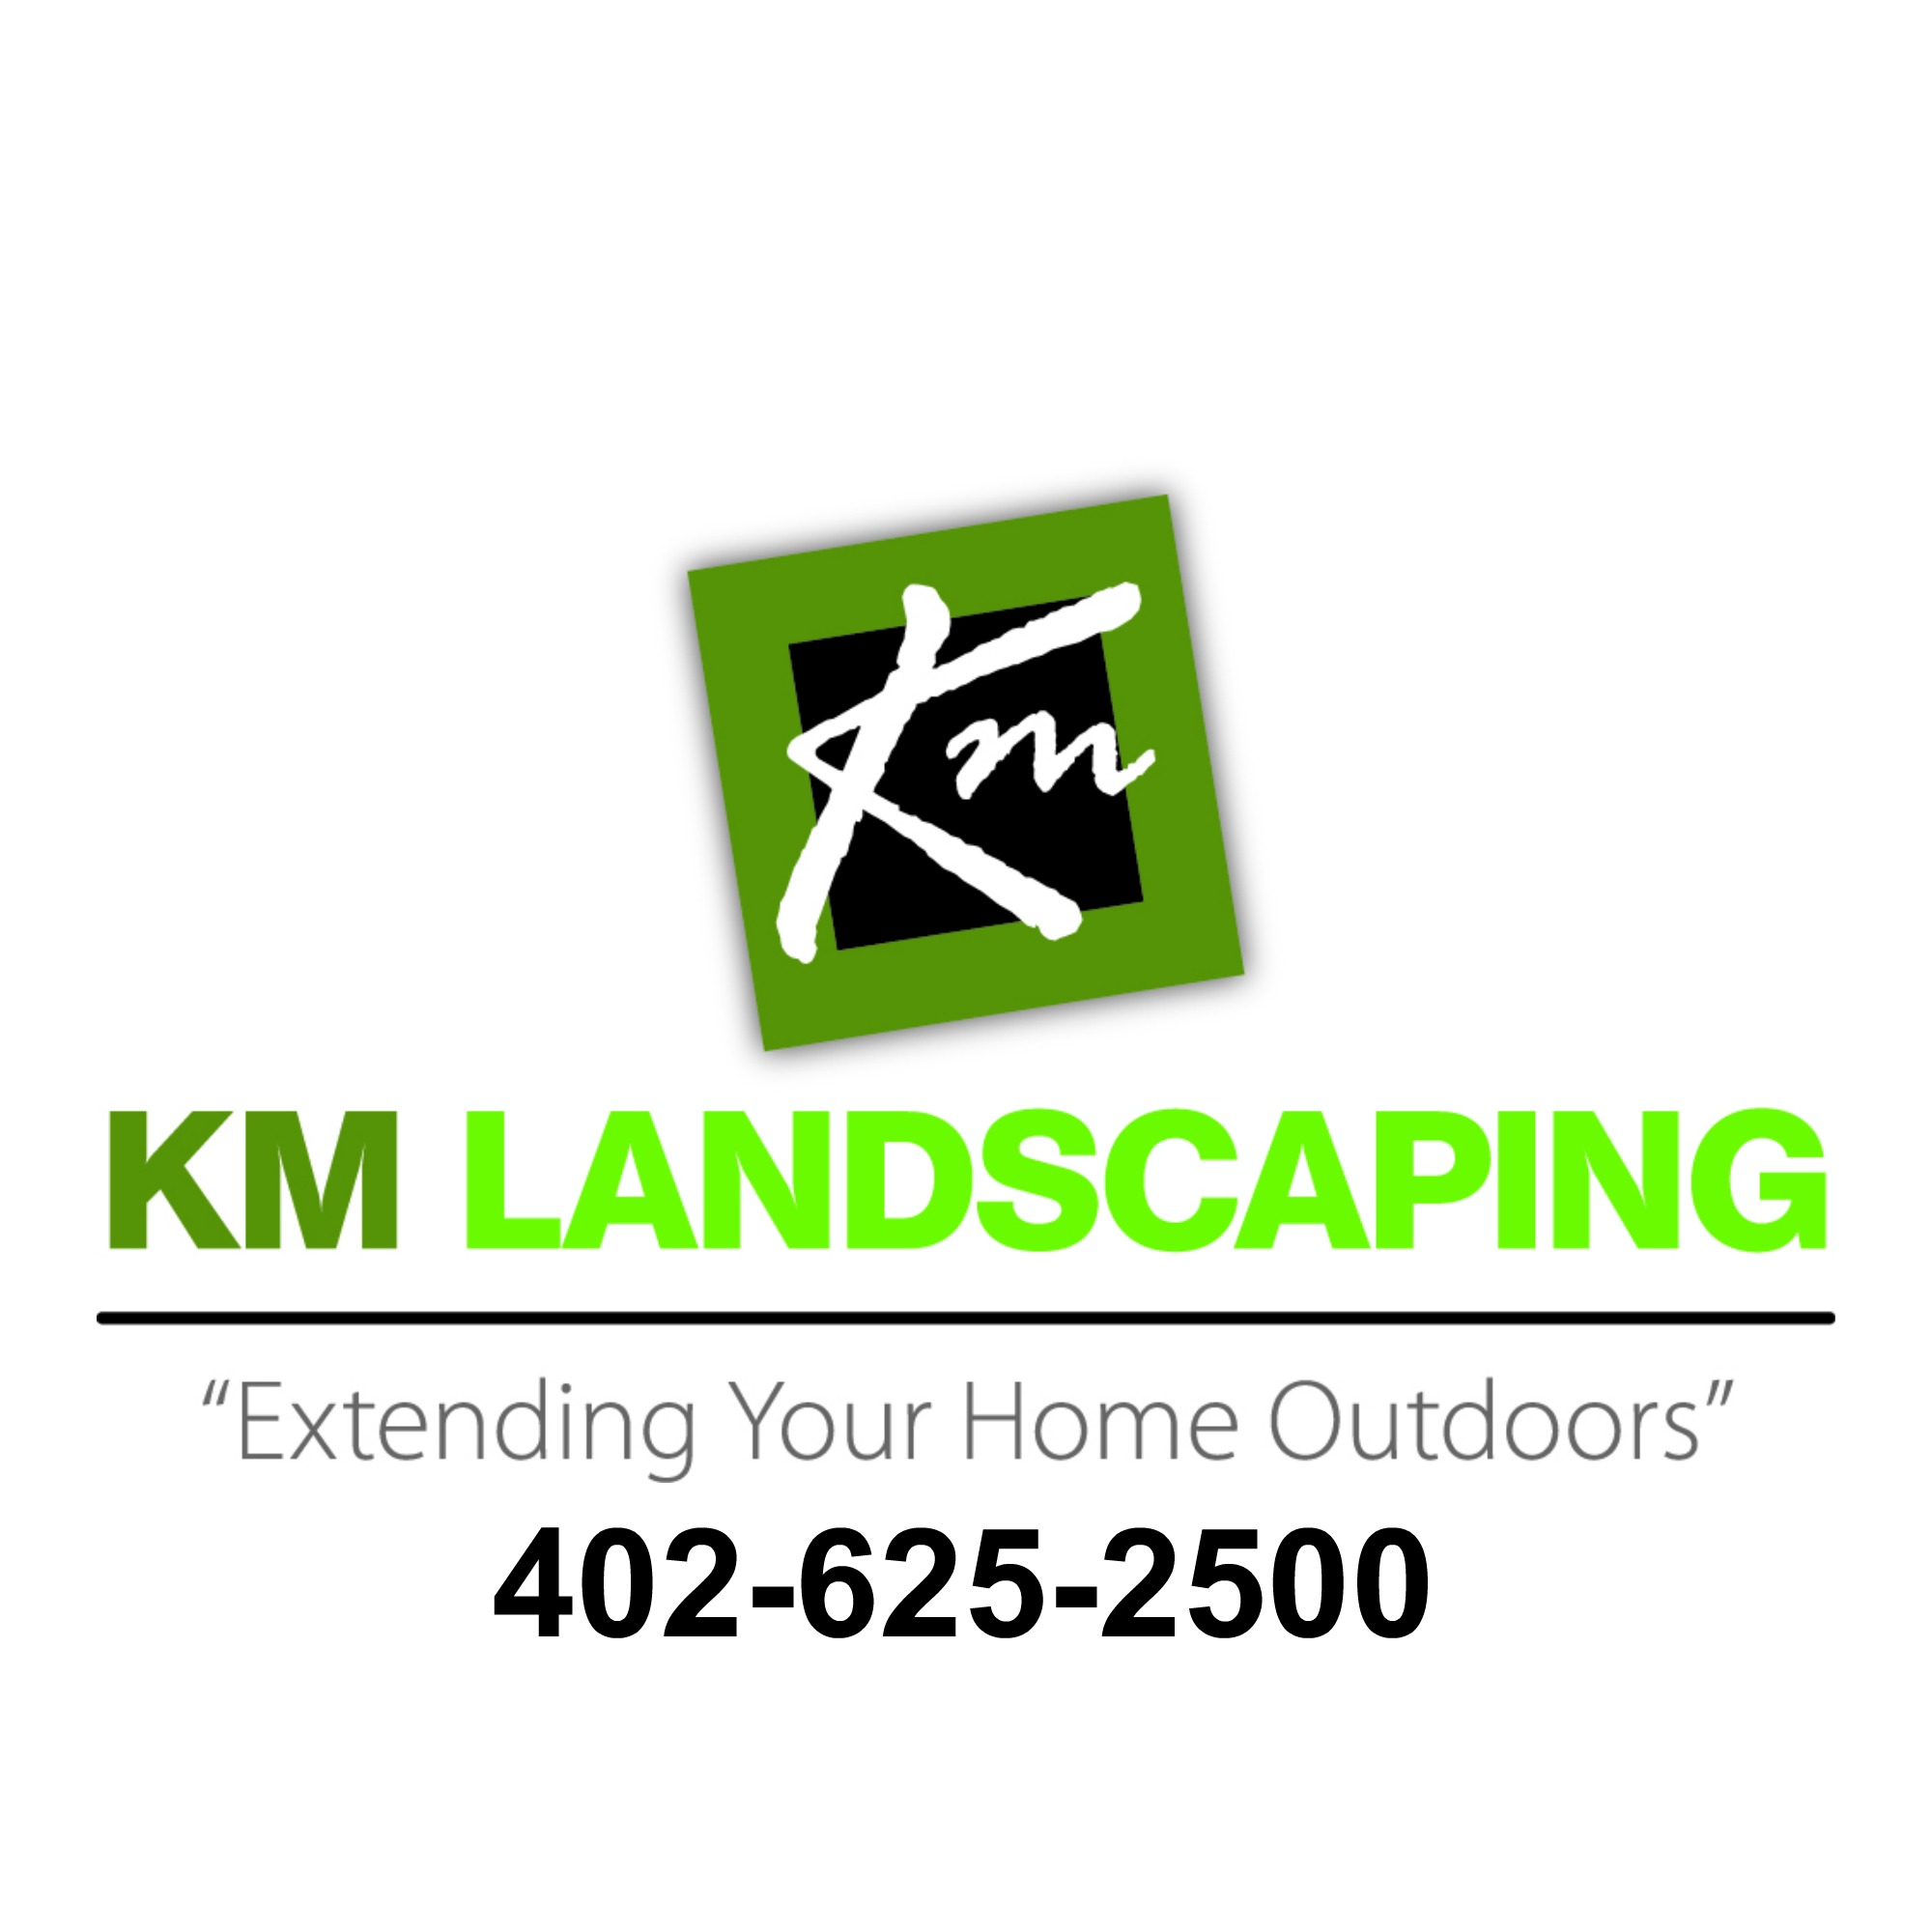 Km Landscaping Watkins Concrete Block, Km Landscaping Omaha